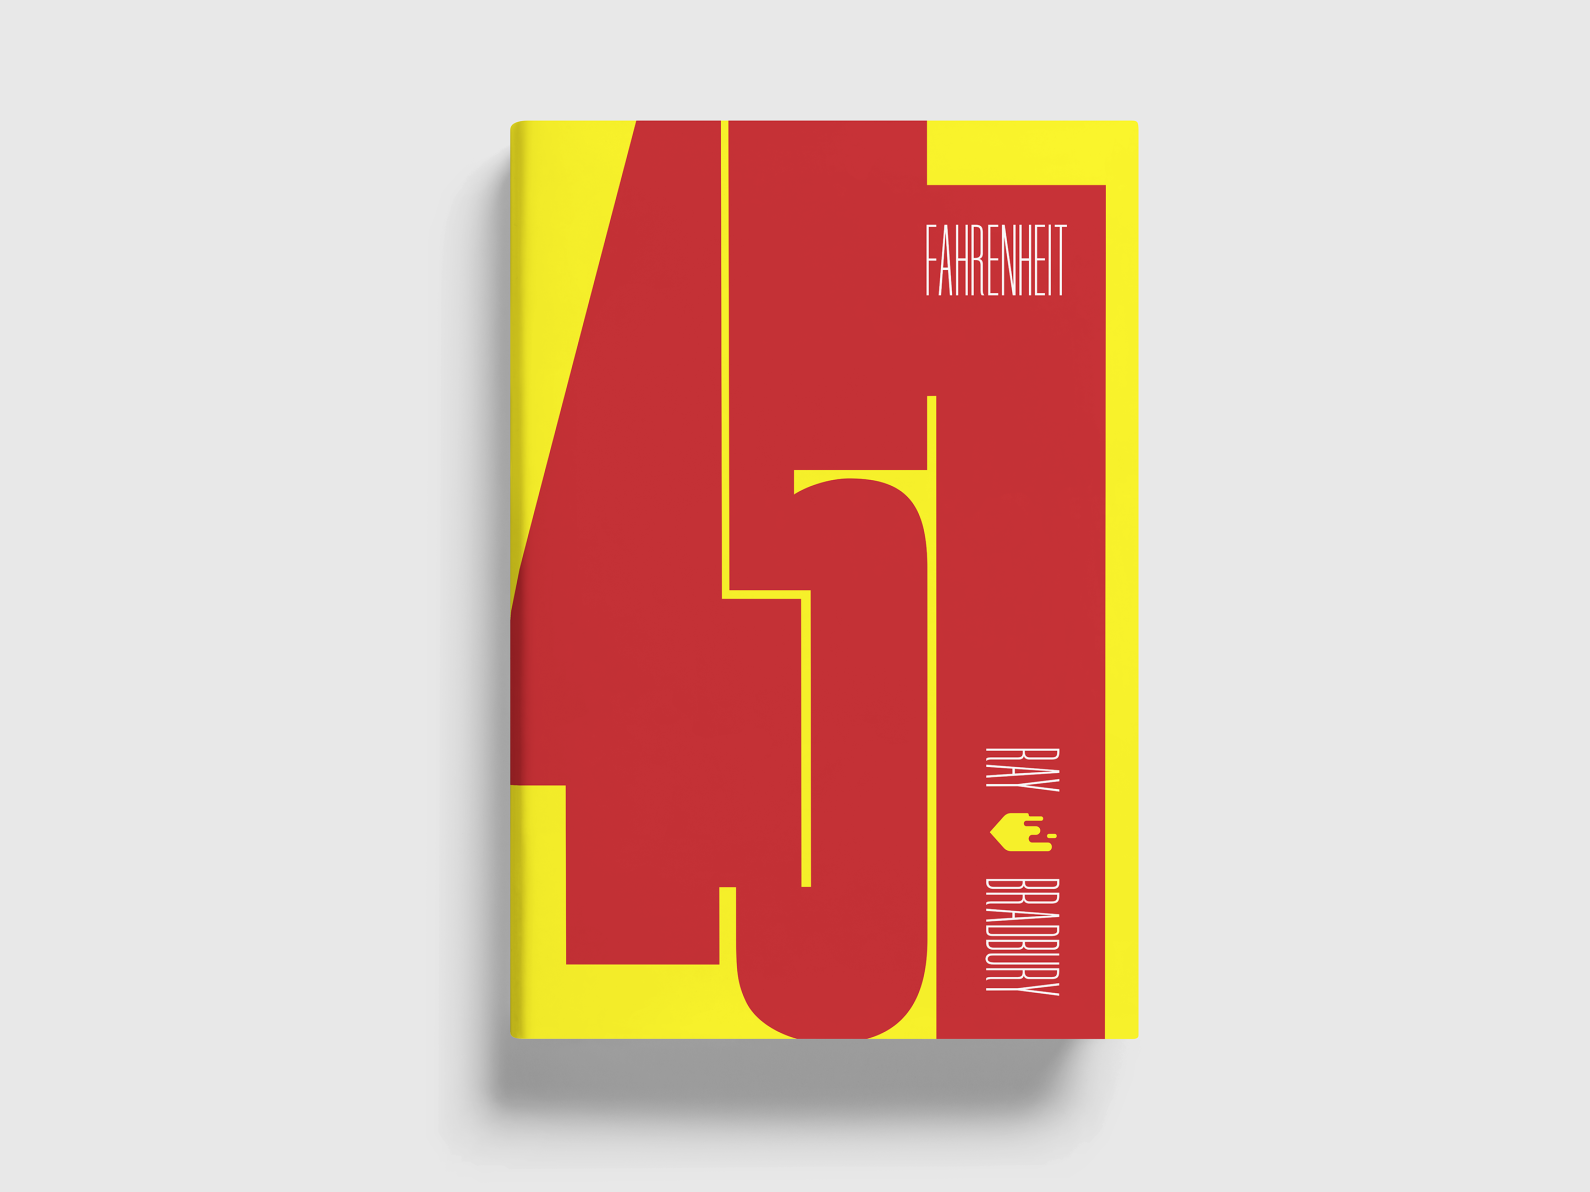 Fahrenheit 451 book. 451 Градус по Фаренгейту книга. 451 Fahrenheit book Cover.